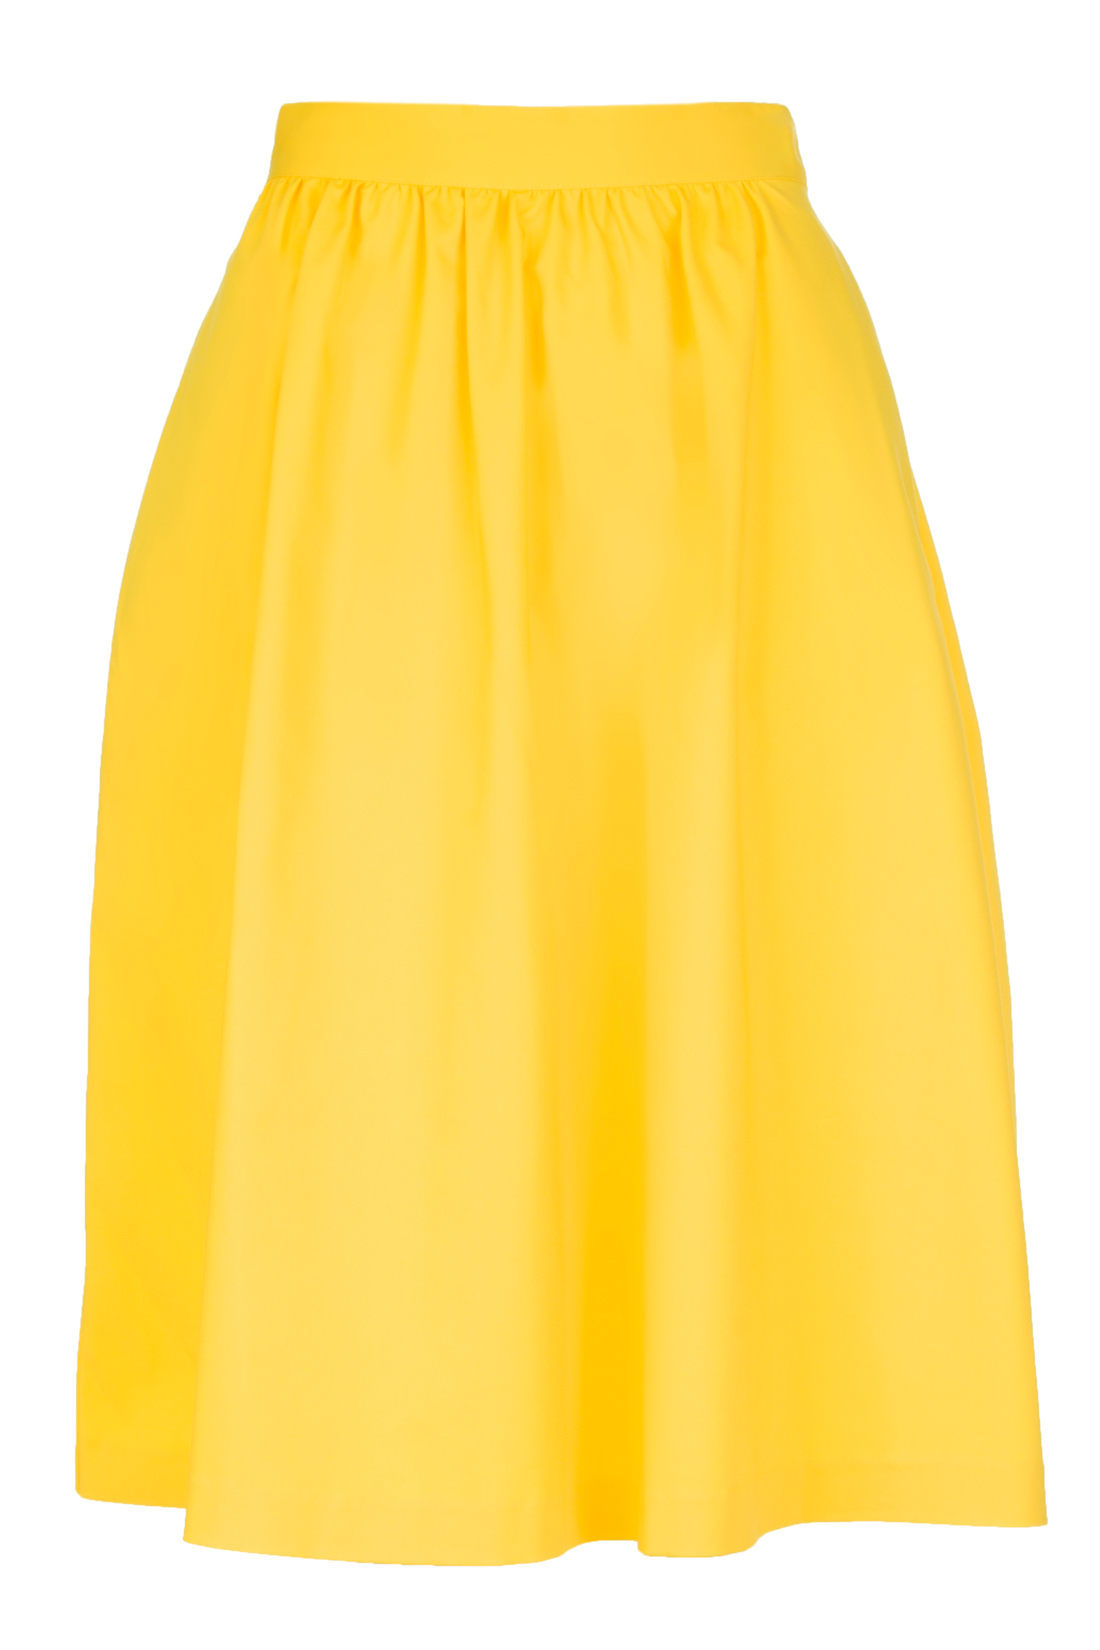 Юбка со складками (арт. baon B477009), размер L, цвет желтый Юбка со складками (арт. baon B477009) - фото 4